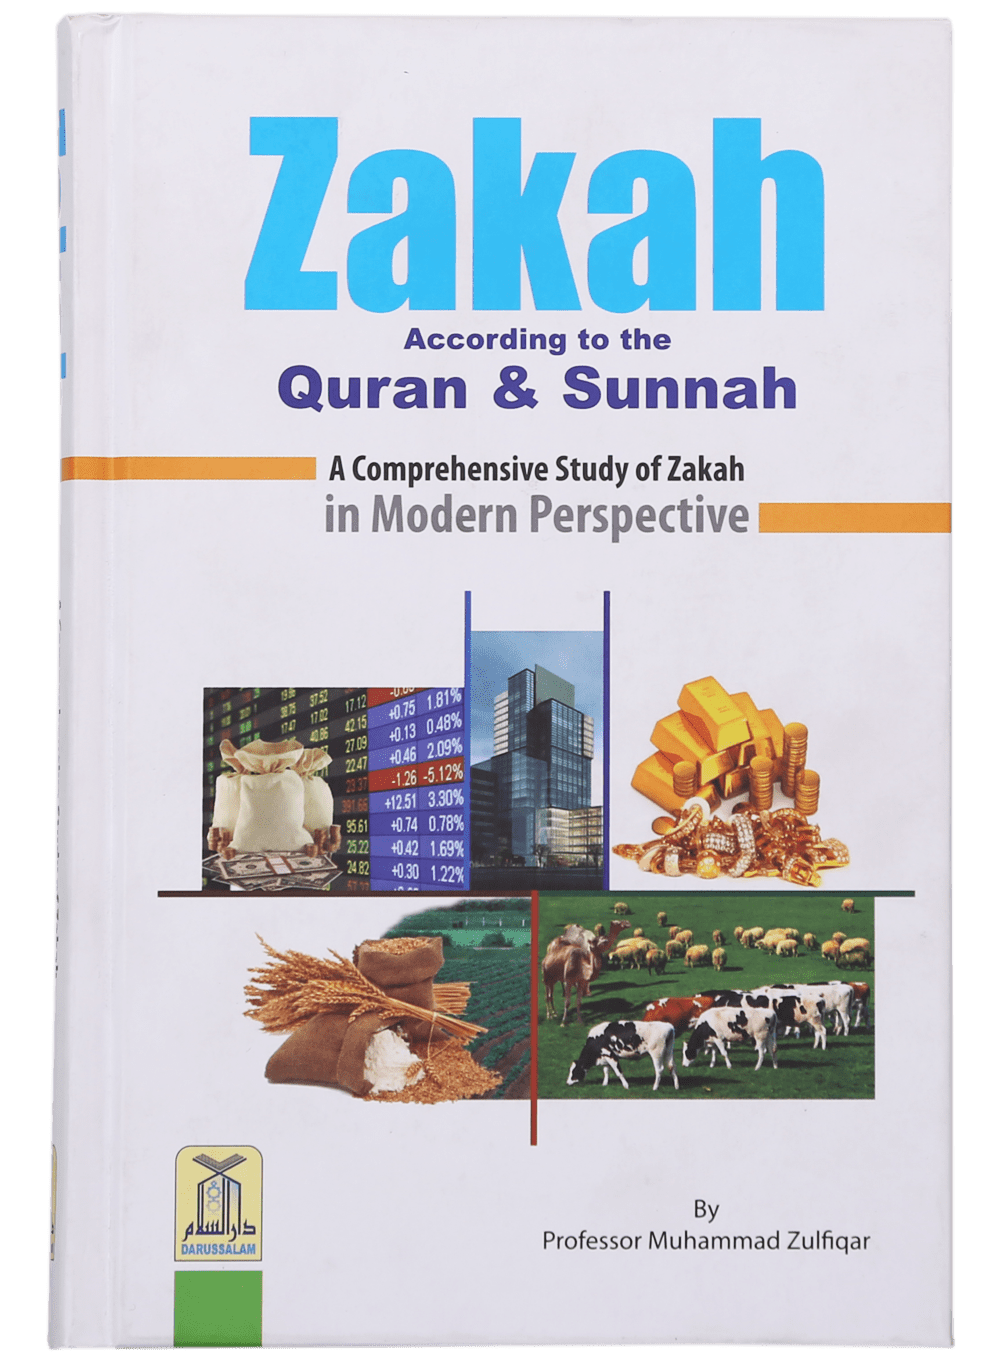 darussalam-2017-06-12-13-03-29zakkah-according-to-quran-and-sunnah-(1)